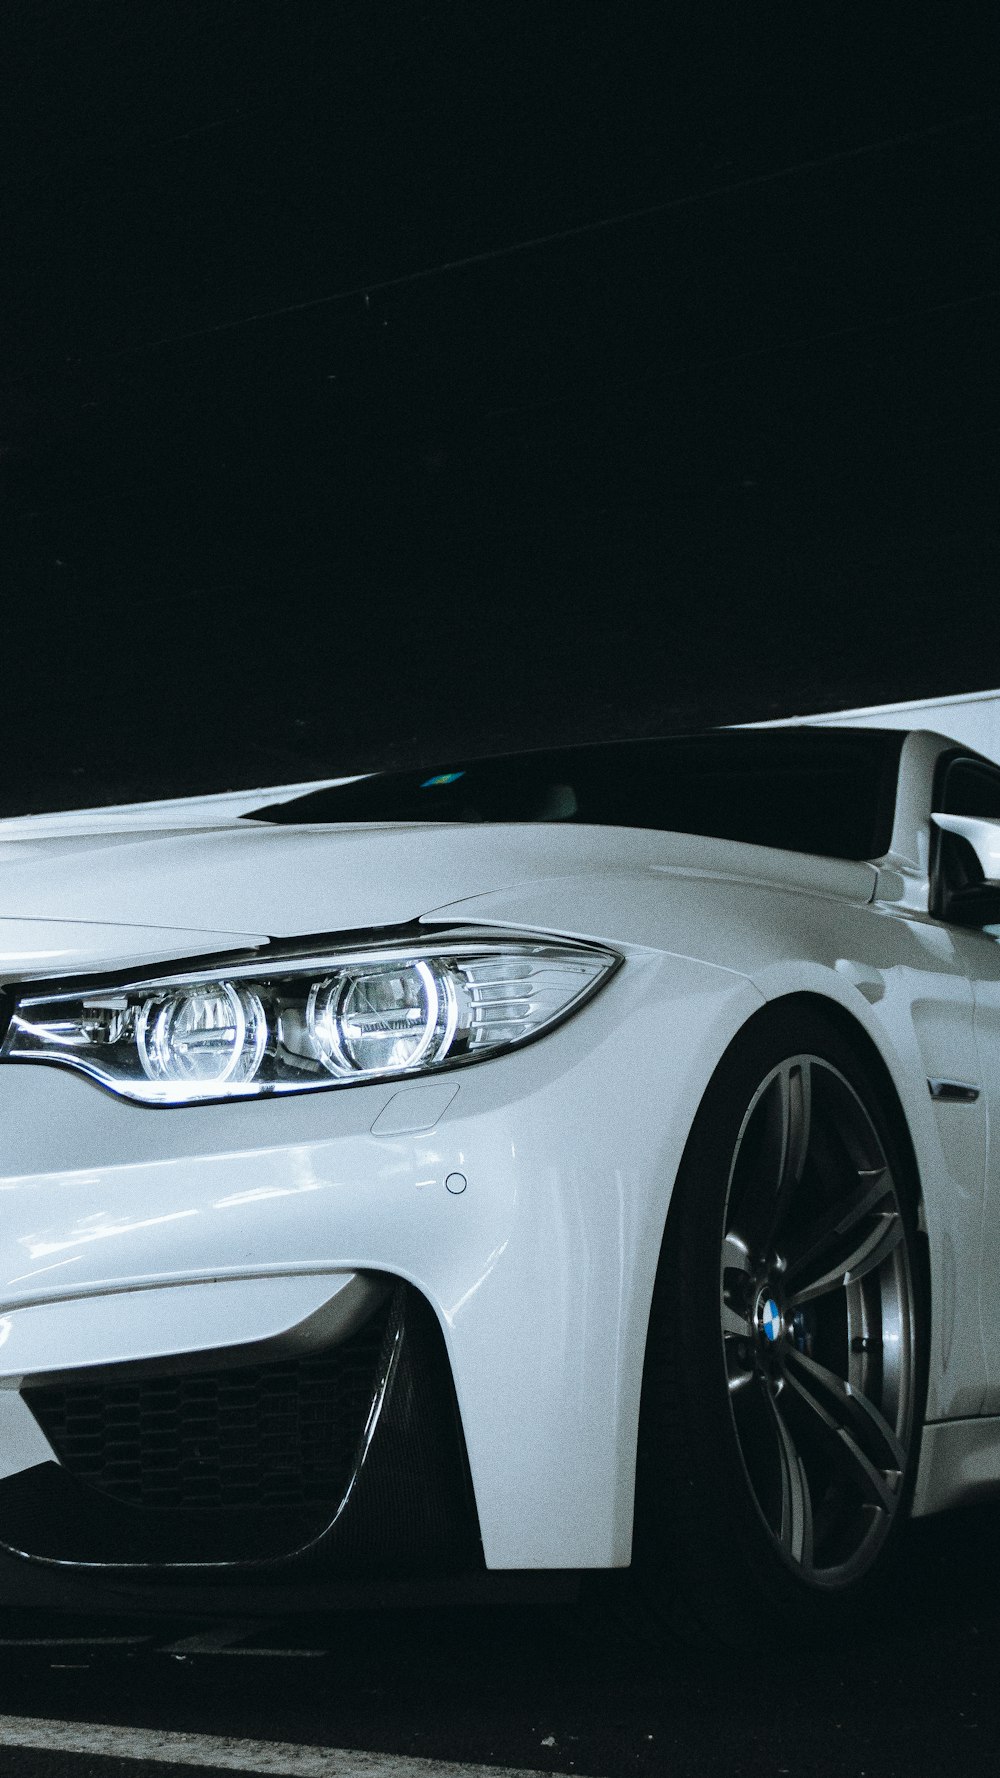 coche BMW blanco